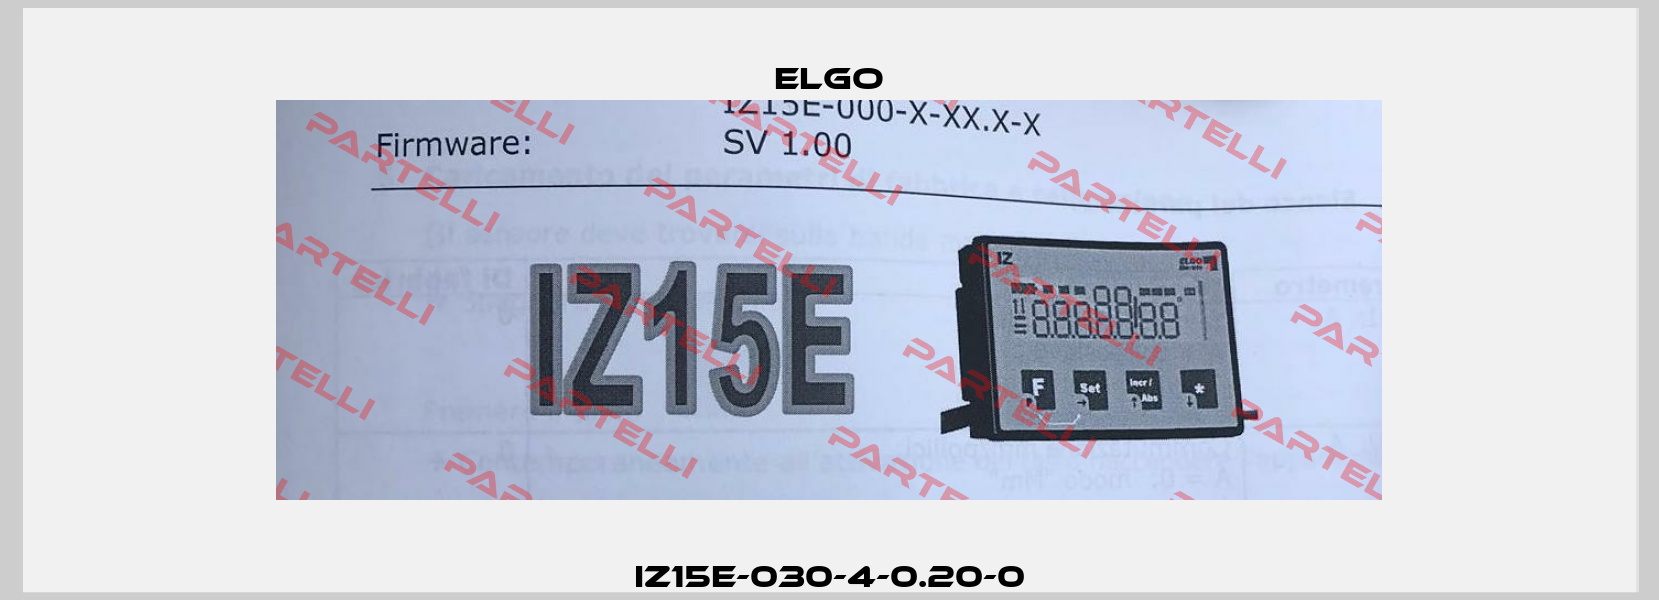 IZ15E-030-4-0.20-0 Elgo